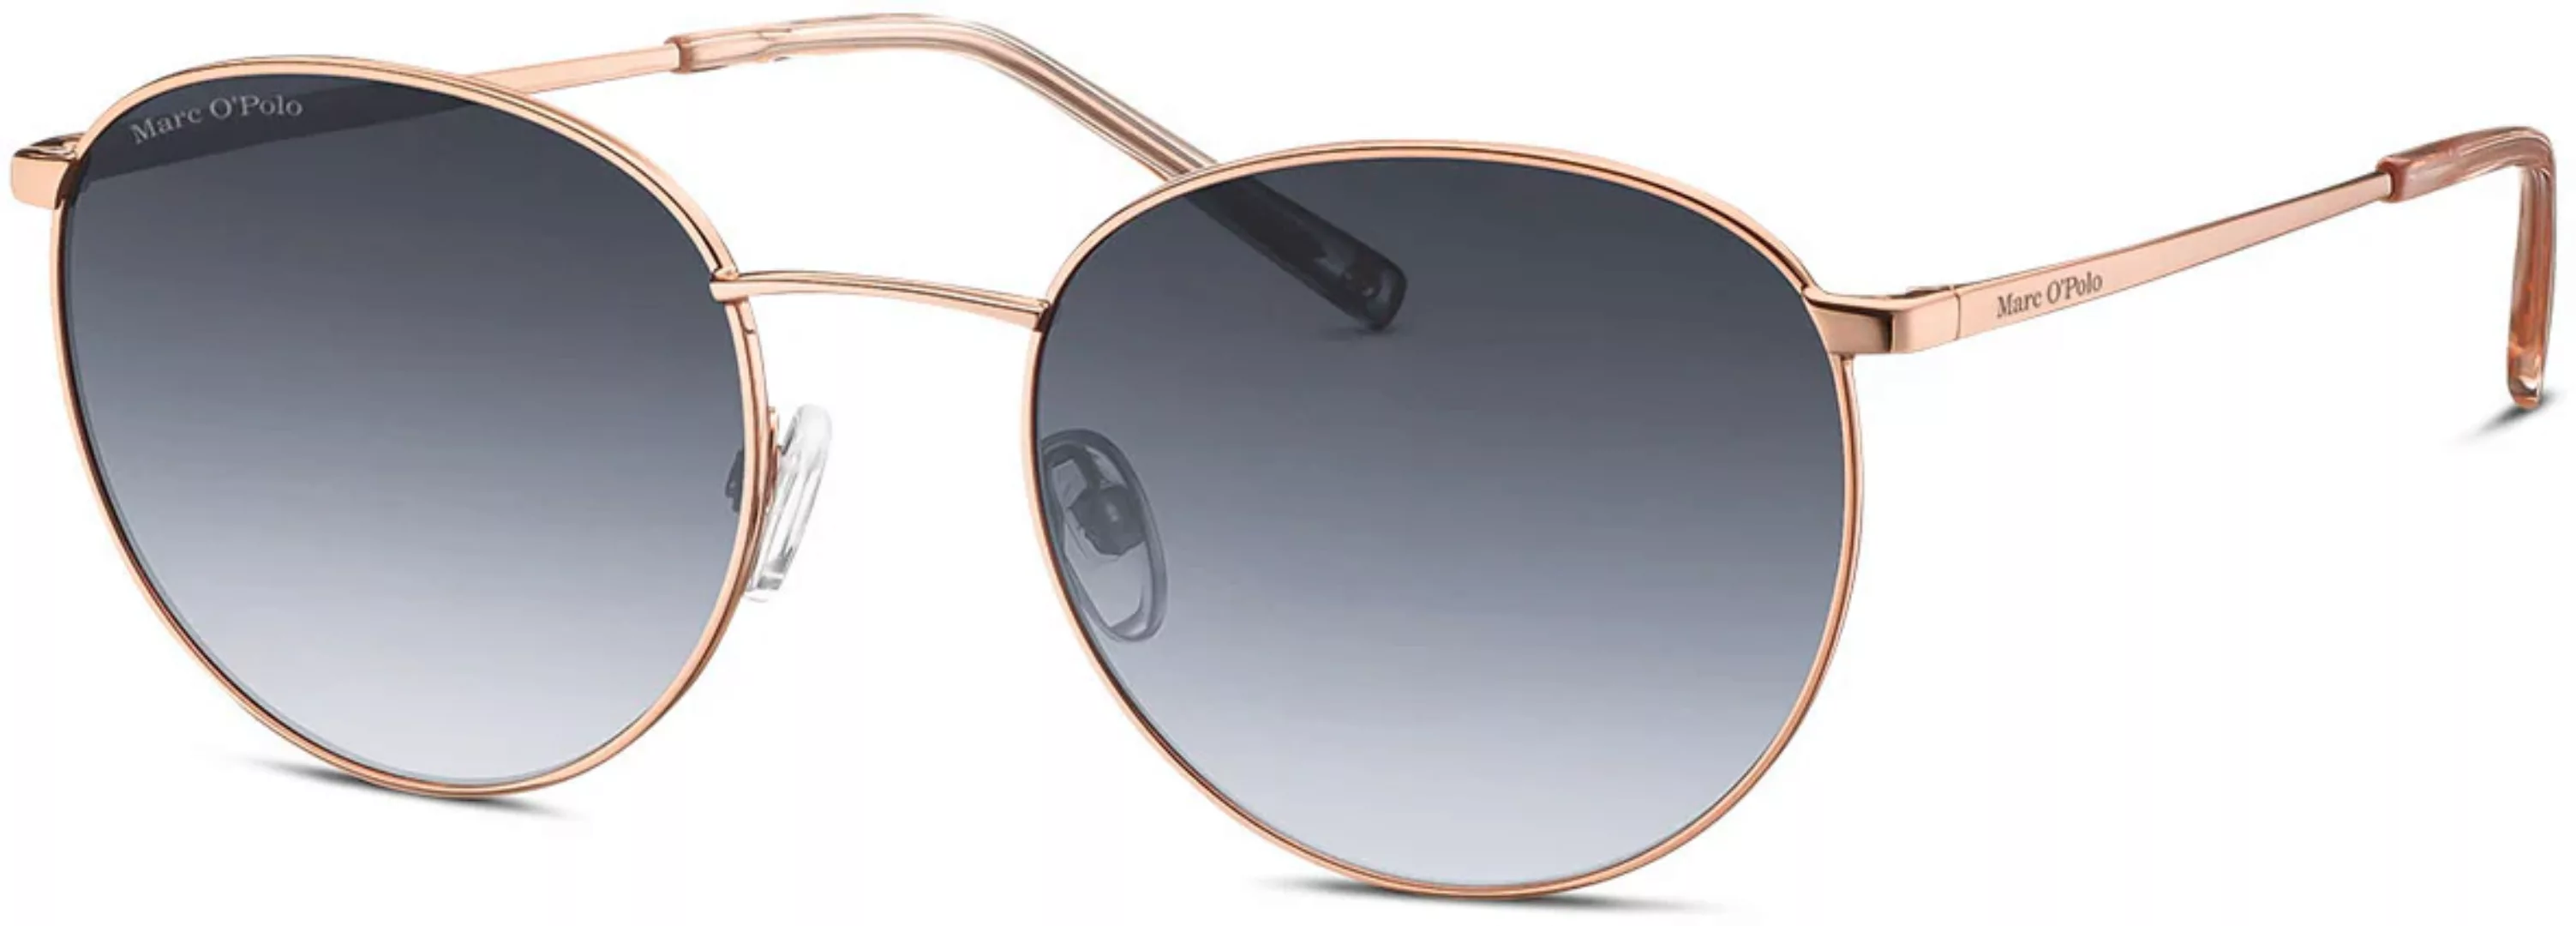 Marc OPolo Sonnenbrille "Modell 505101", Panto-Form günstig online kaufen